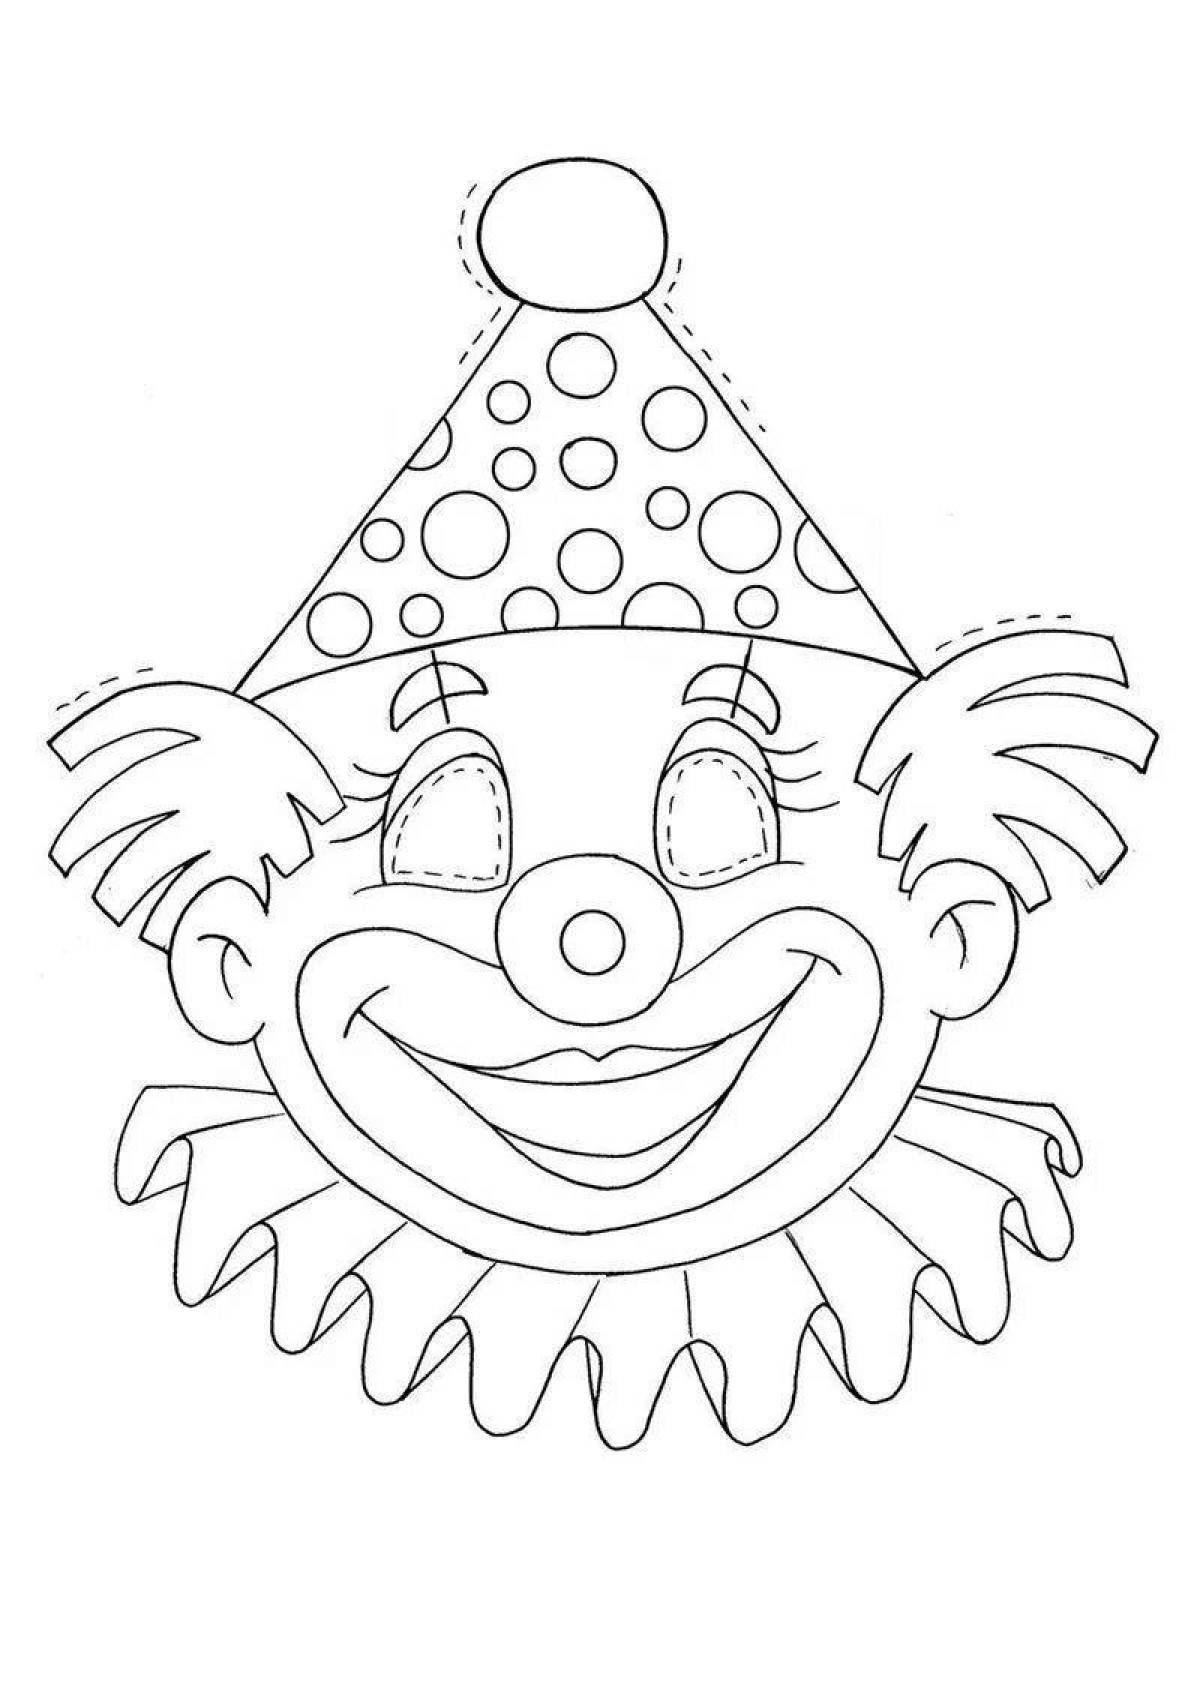 Маски на 1 апреля распечатать. Клоун раскраска. Клоун раскраска для детей. Маска клоун раскраска для детей. Маски клоуна для детей.